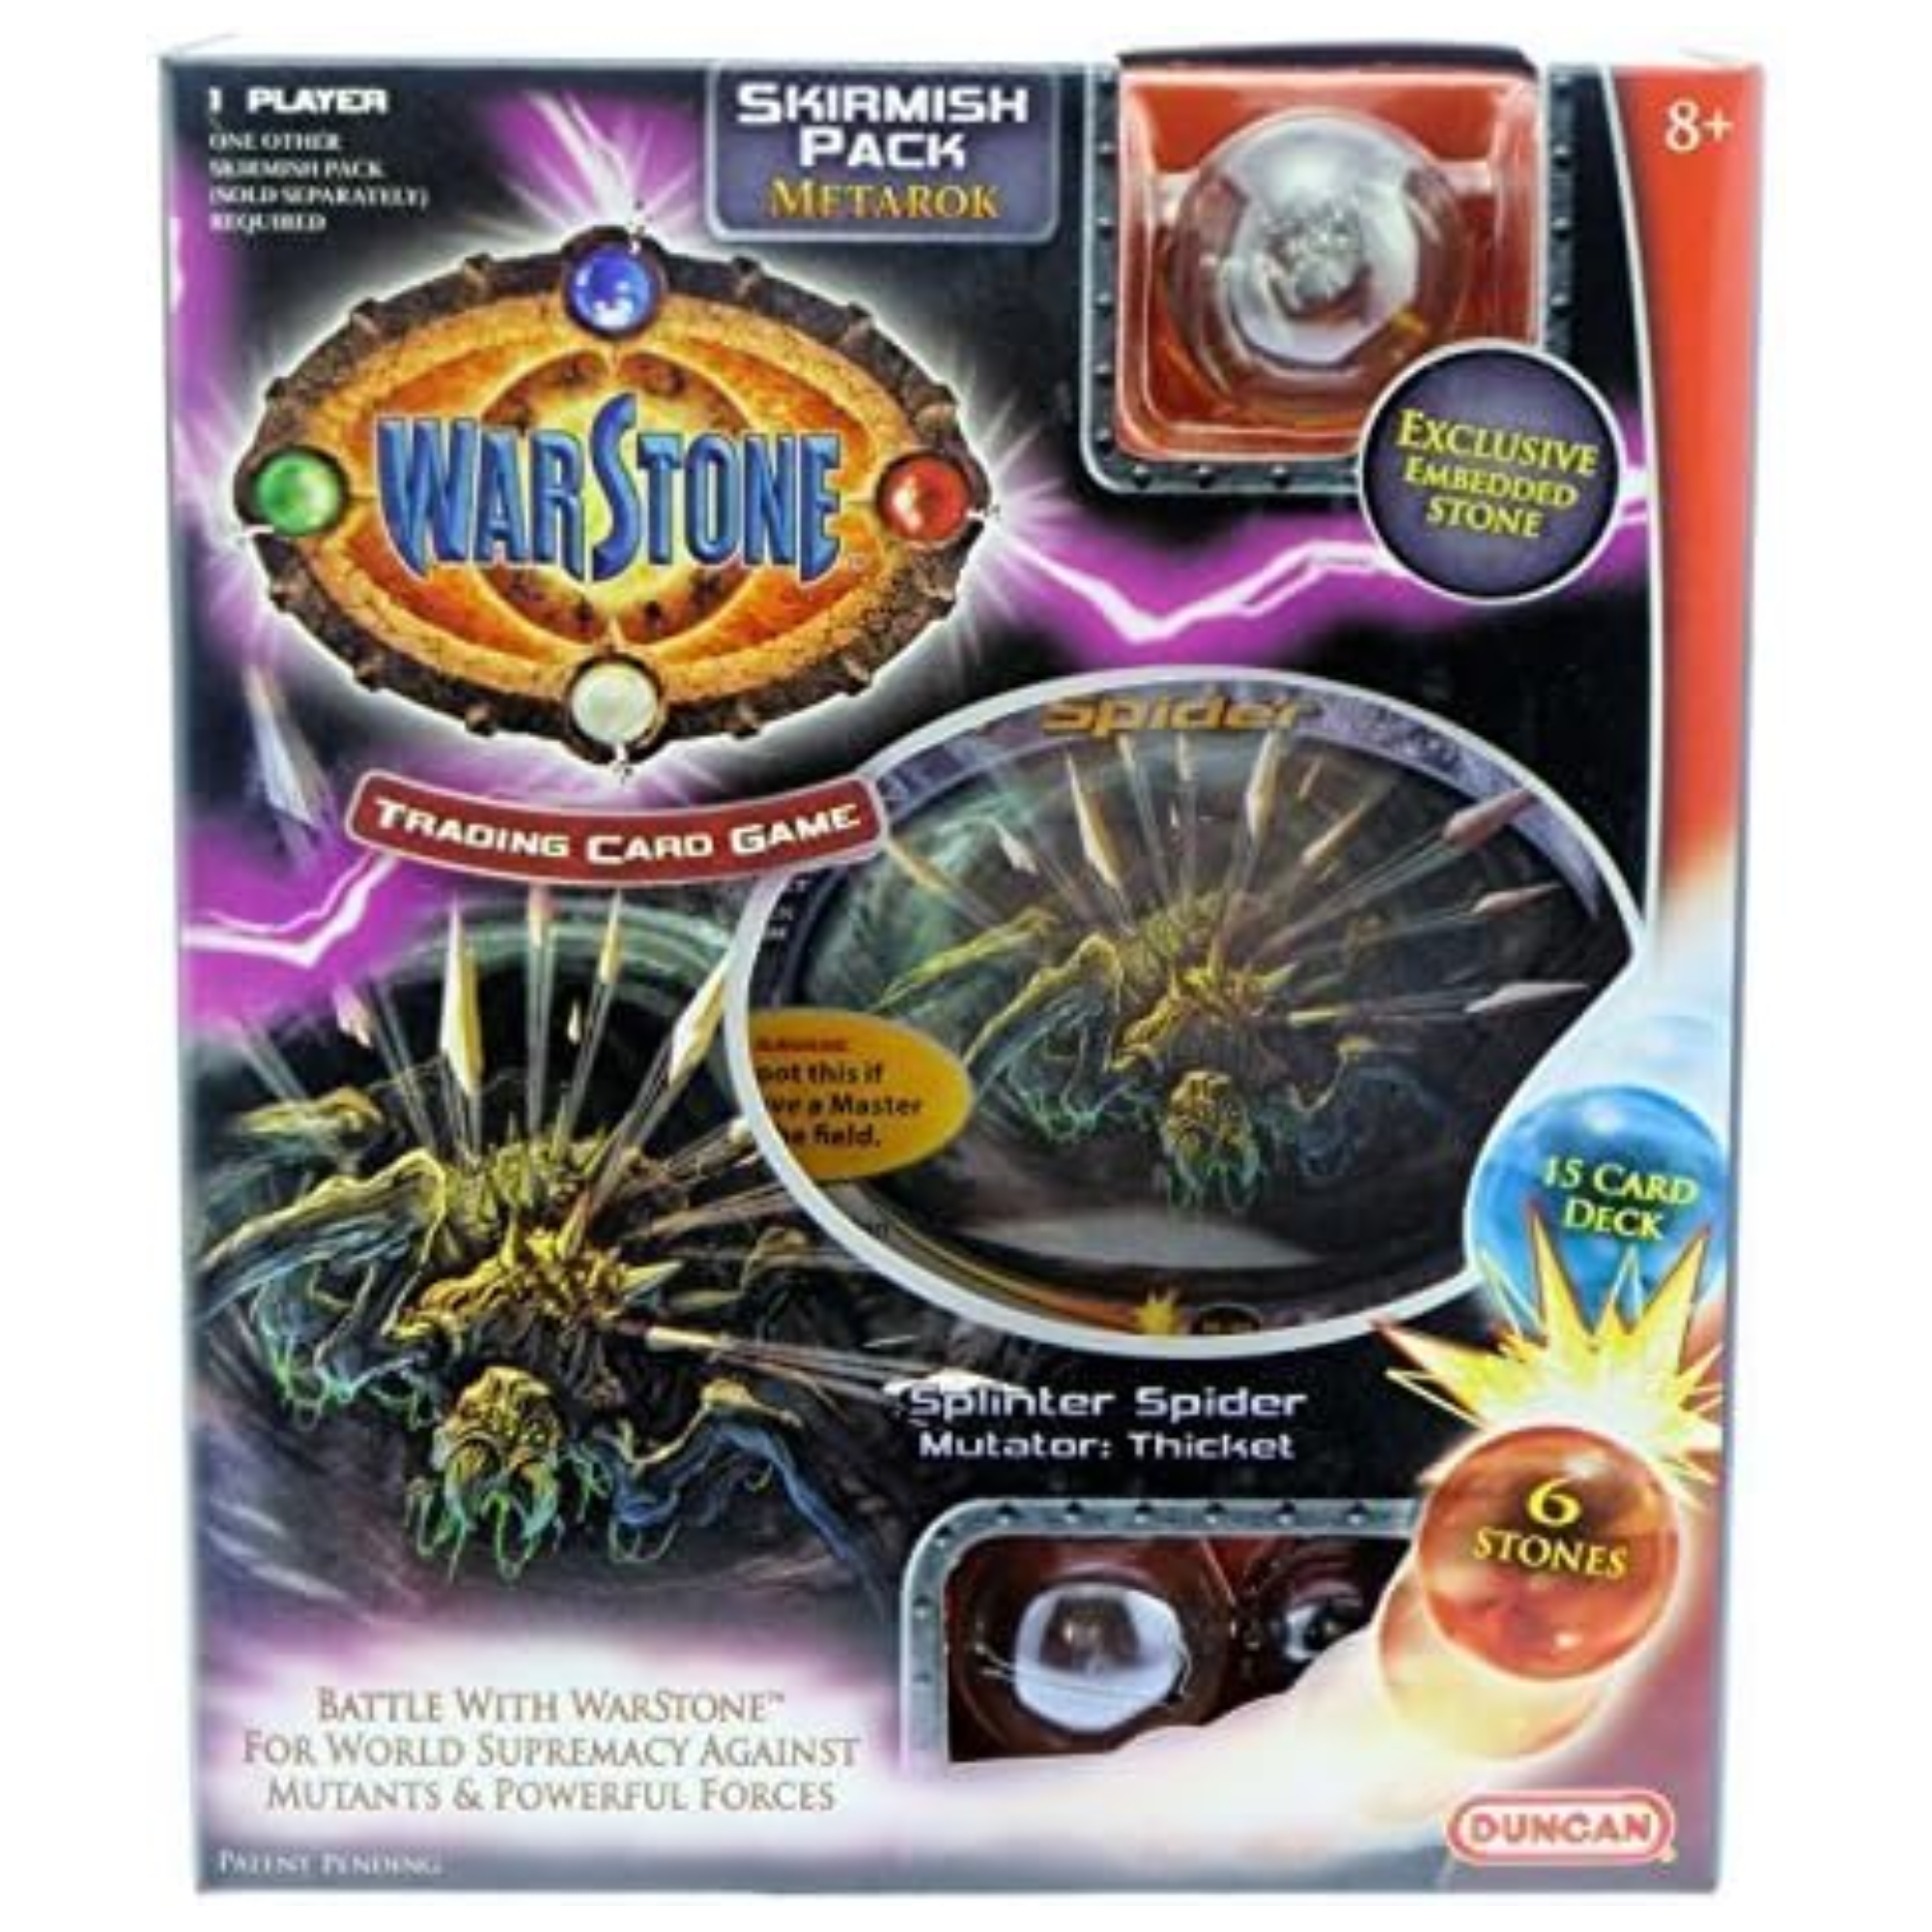 WarStone Skirmish Pack Trading Card Game  - 15 Card Deck & 6 Stones - Metarok - Toptoys2u